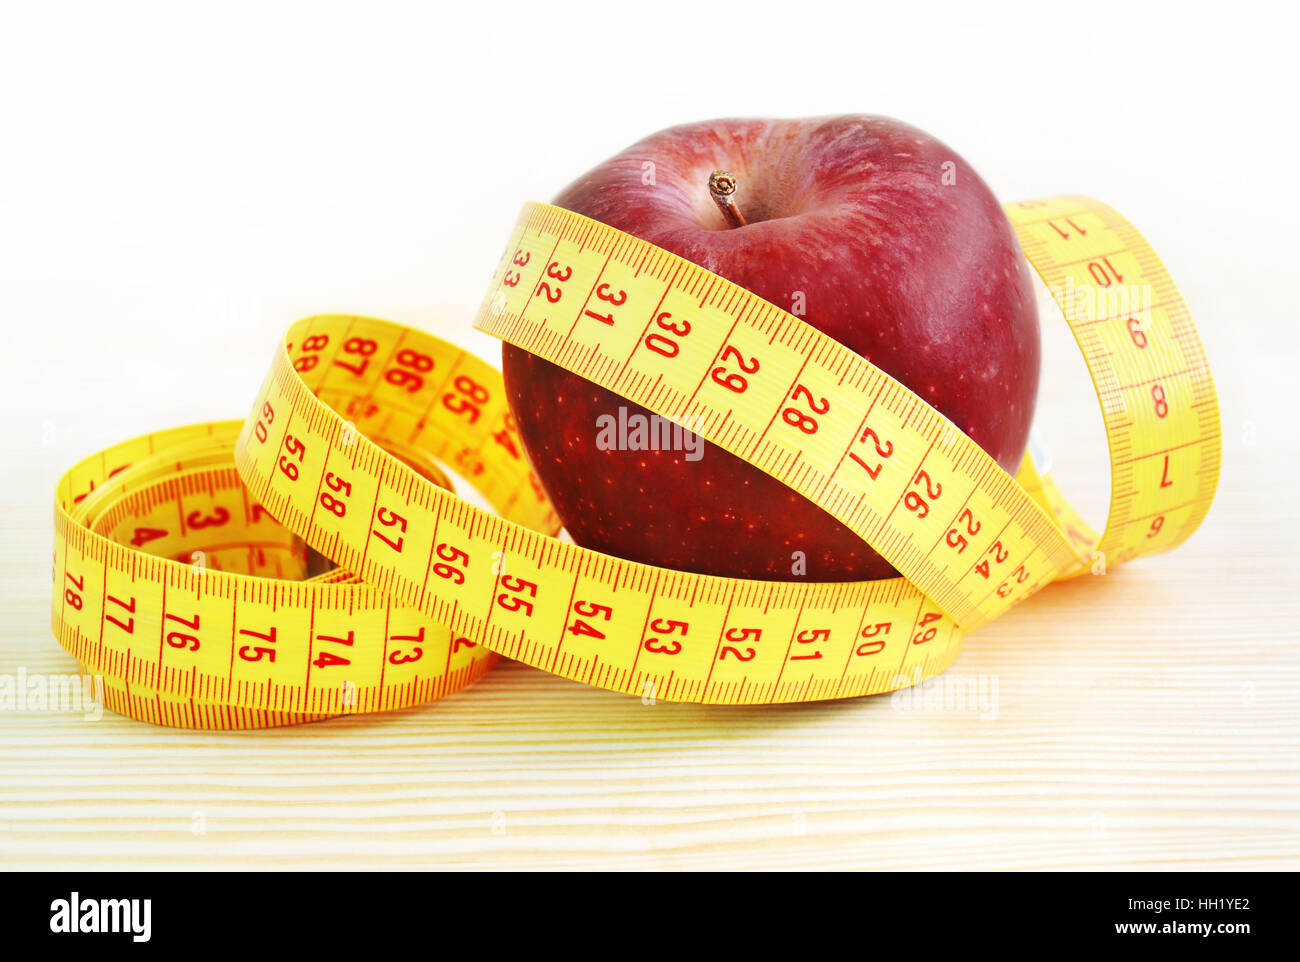 Manzana roja con cinta métrica - pérdida de peso - Dieta concepto Foto de stock